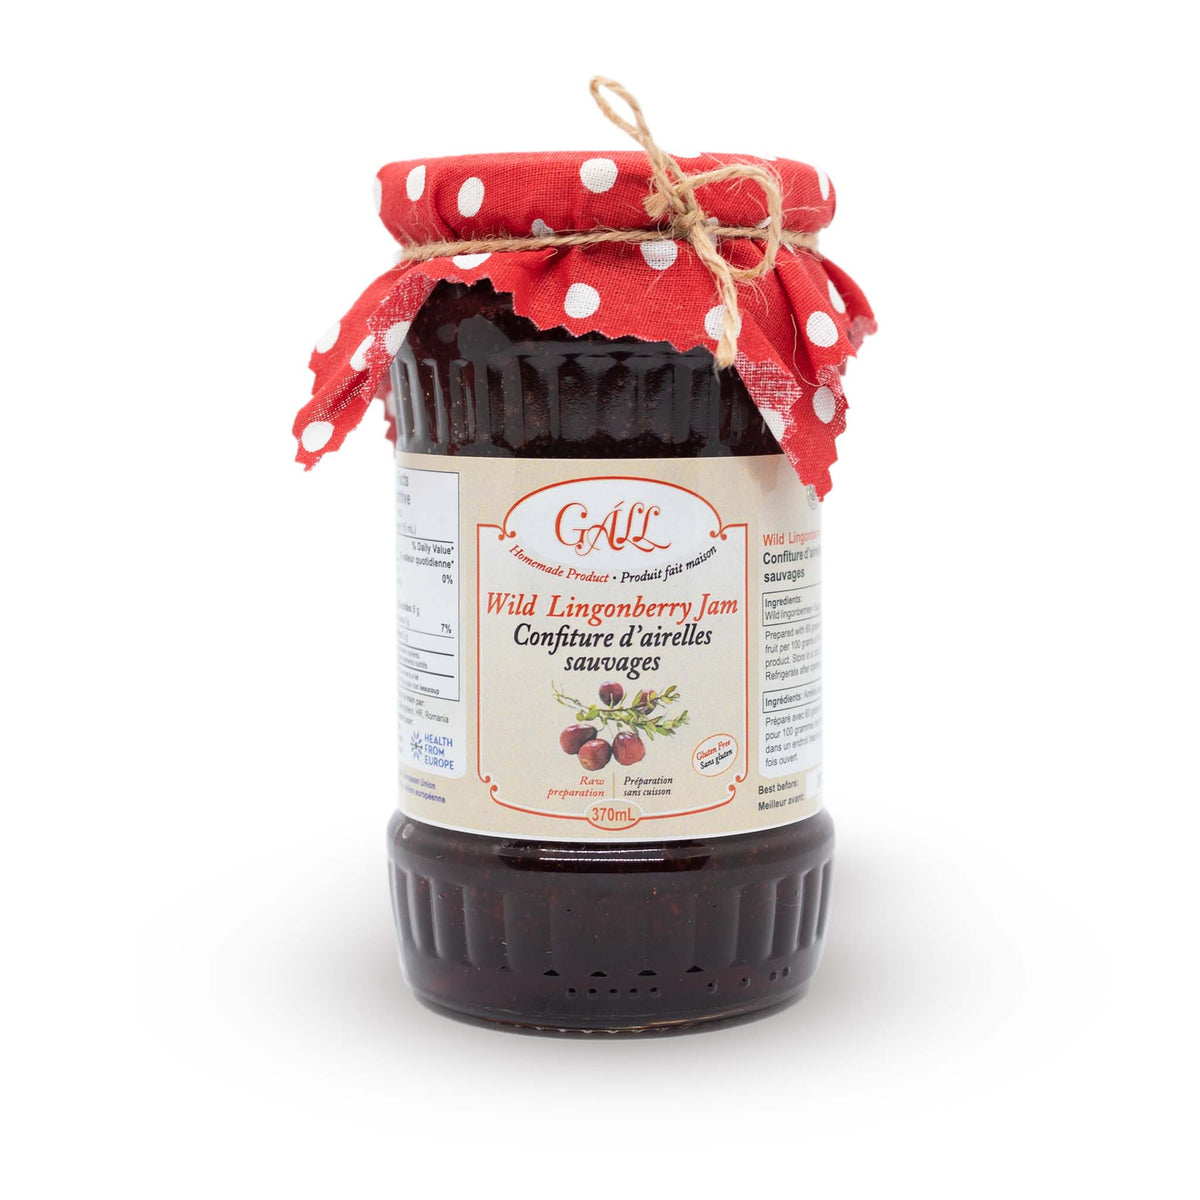 Artisanal Wild Lingonberry Jam jar Health from Europe